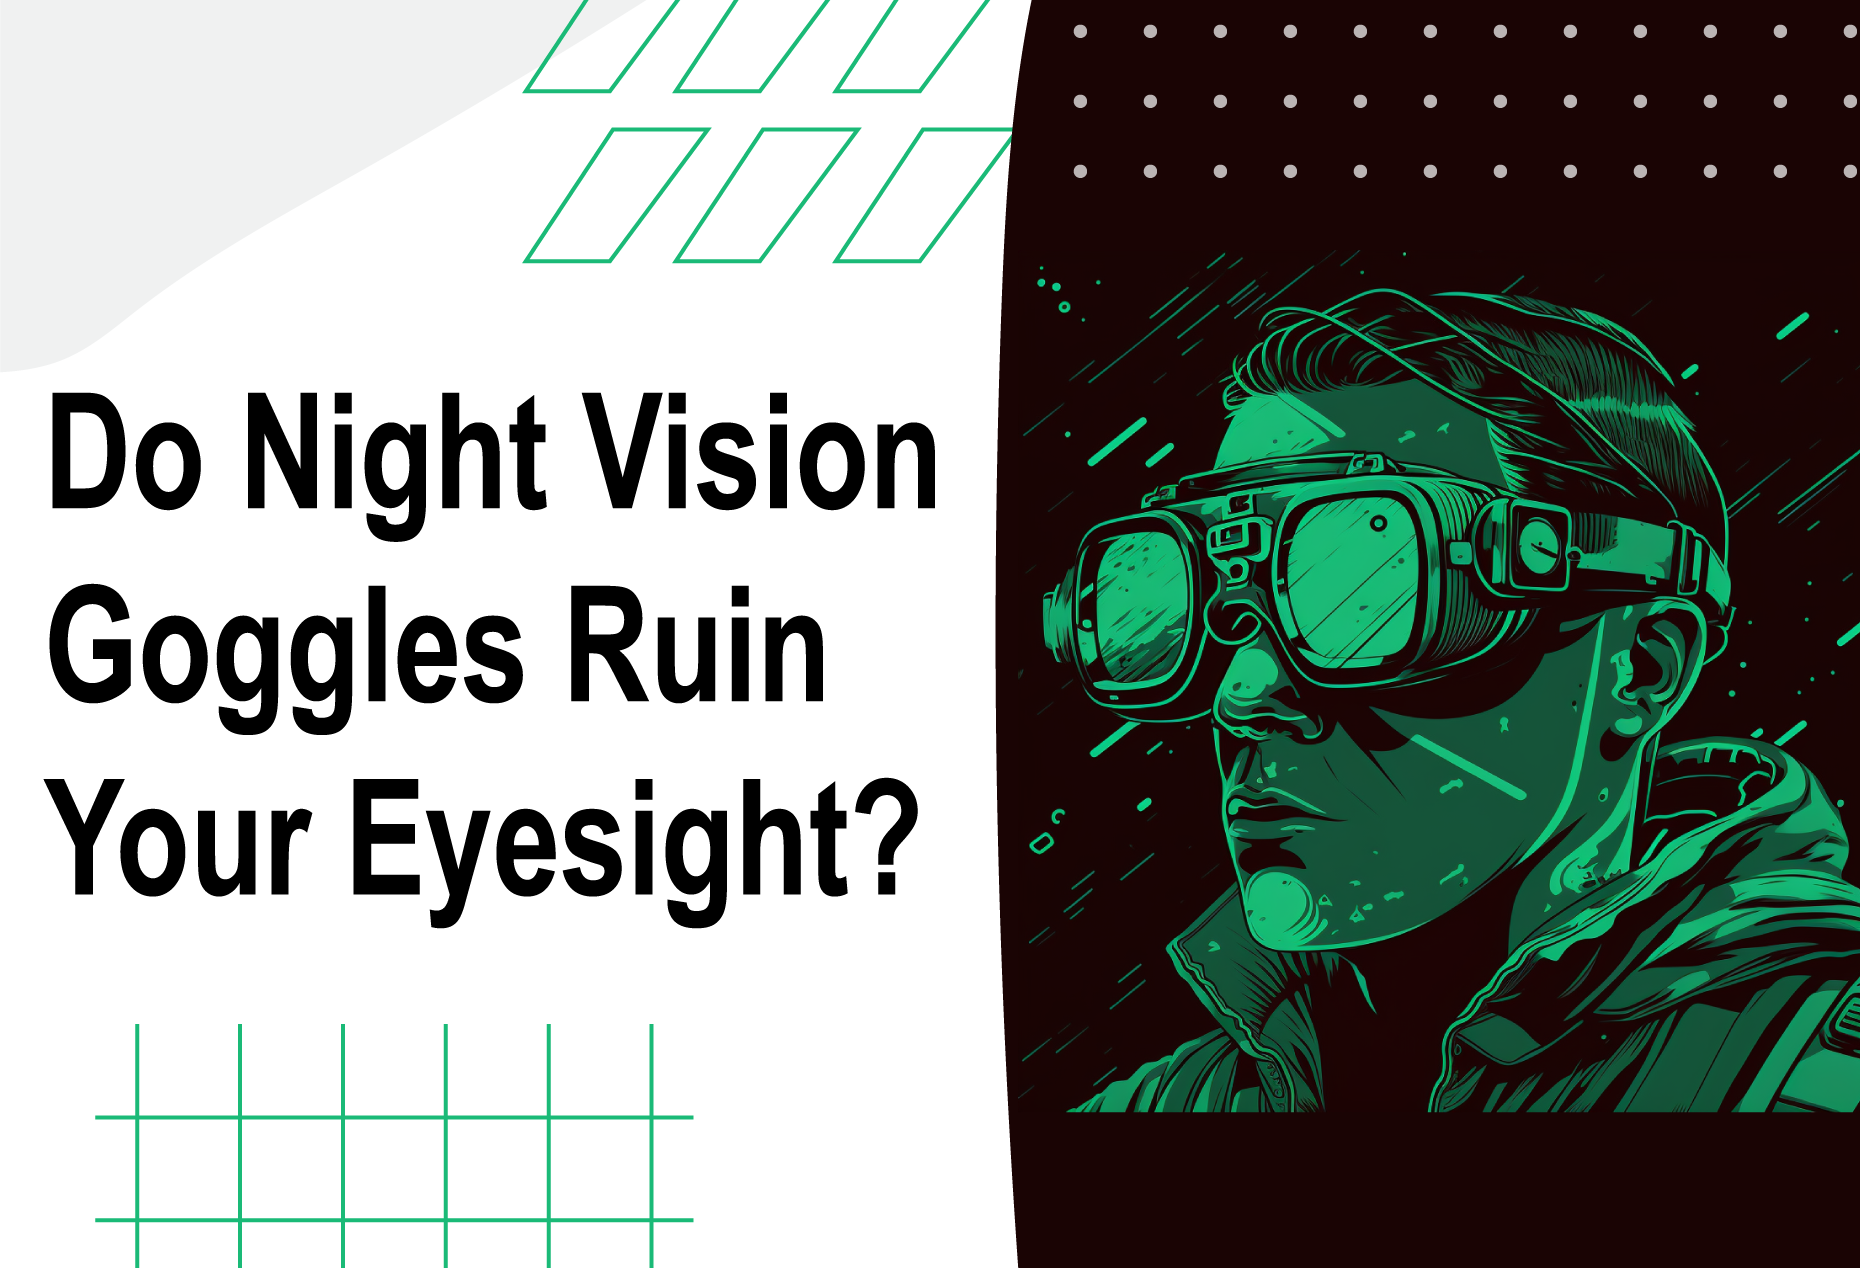 Do Night Vision Goggles Ruin Your Eyesight